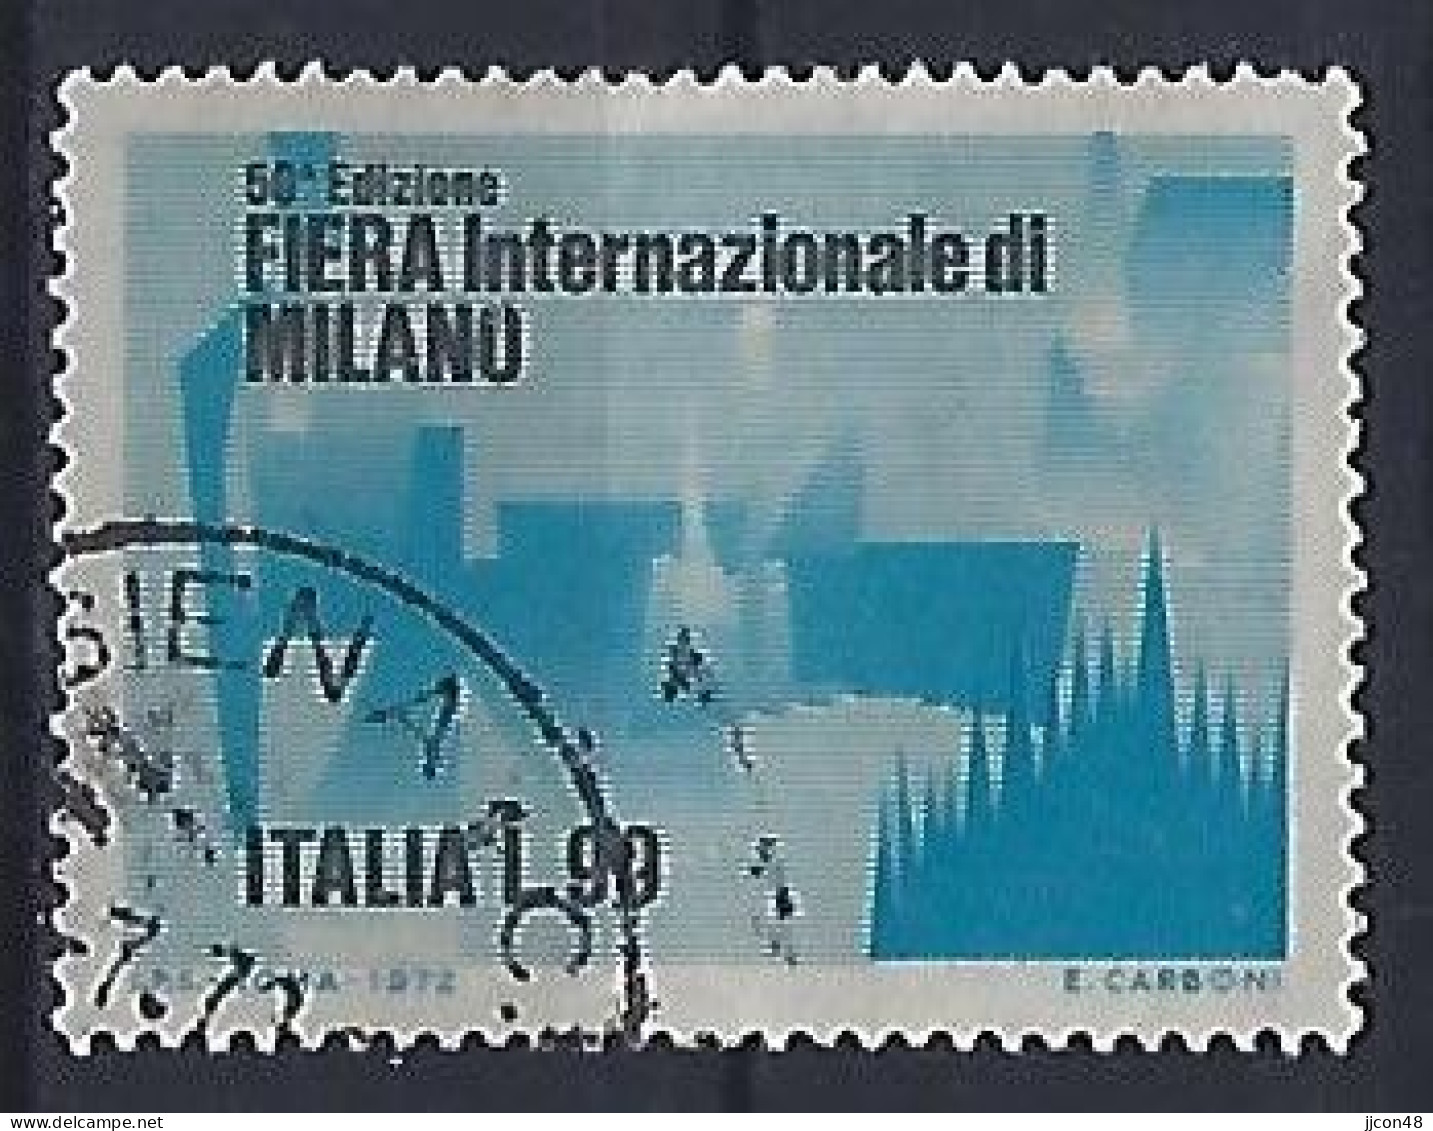 Italy 1972  Mailander Messe  (o) Mi.1363 - 1971-80: Used